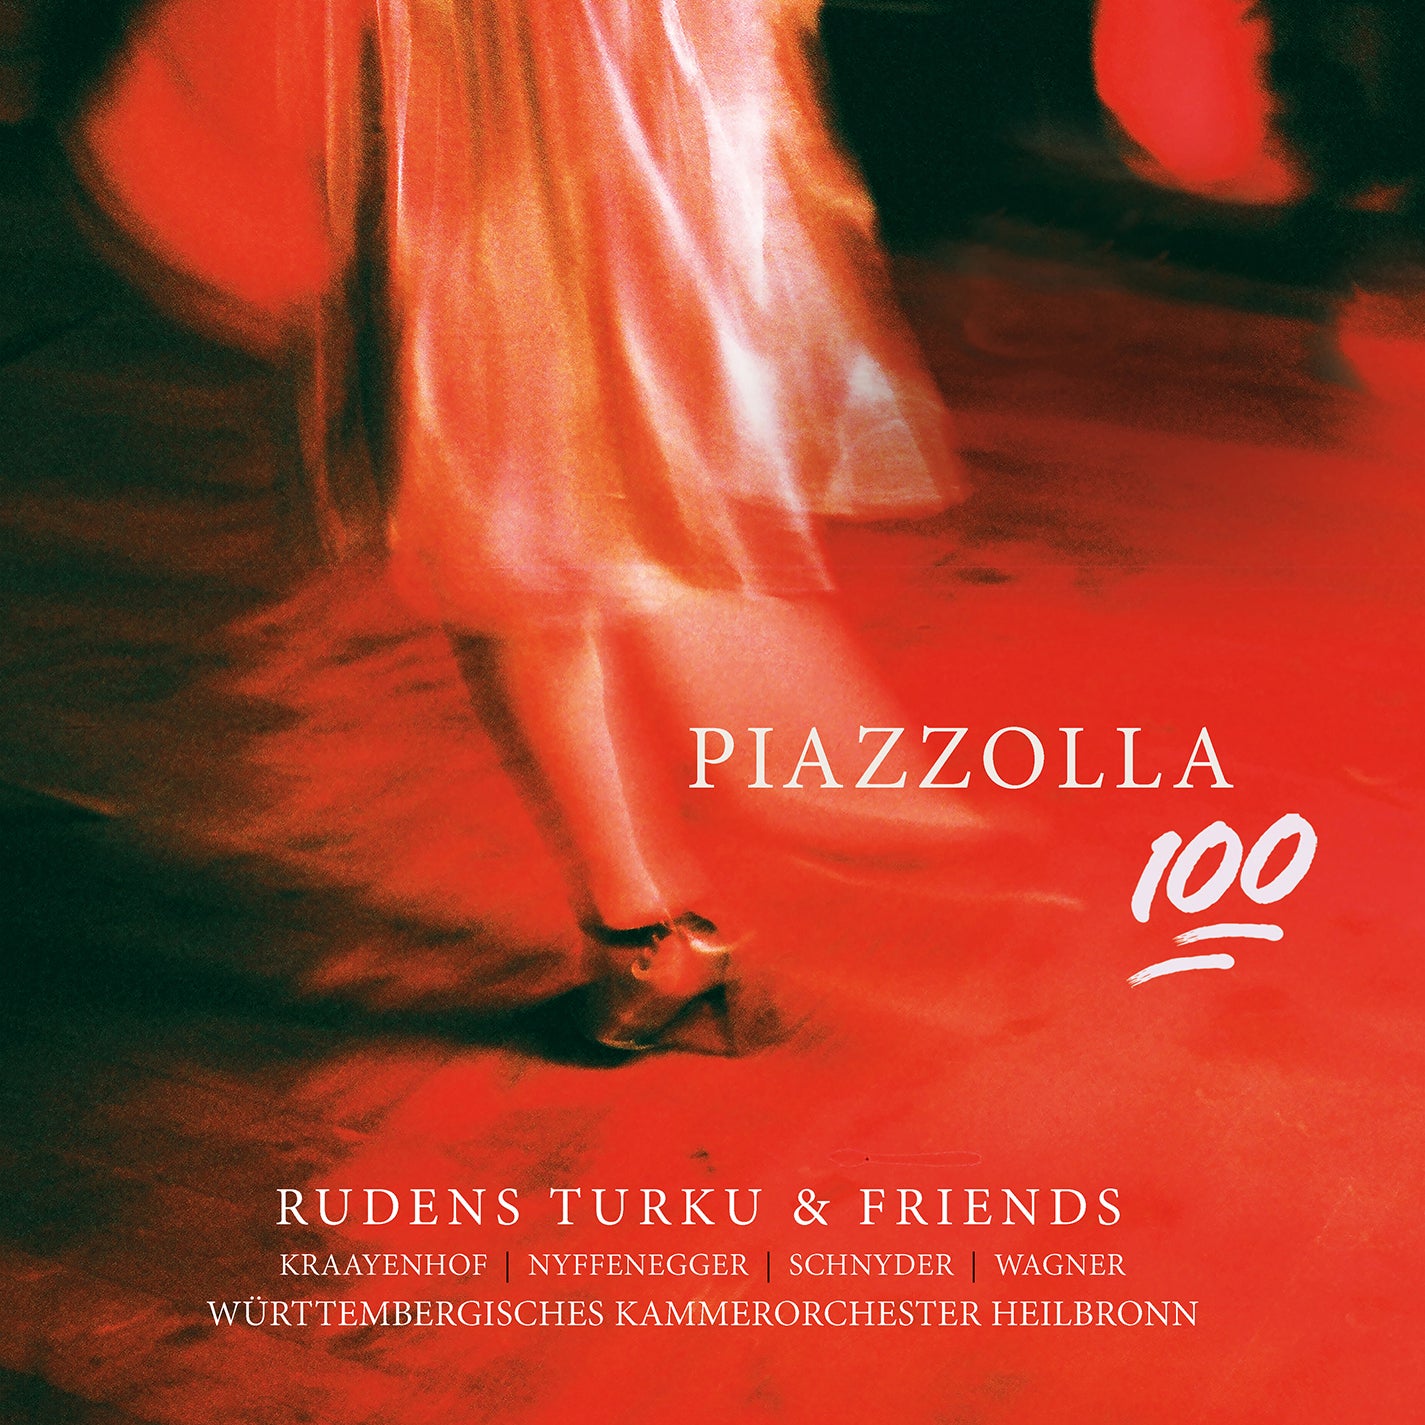 Piazzolla 100 on Vinyl / Turku, Württemberg Chamber Orchestra of Heilbronn